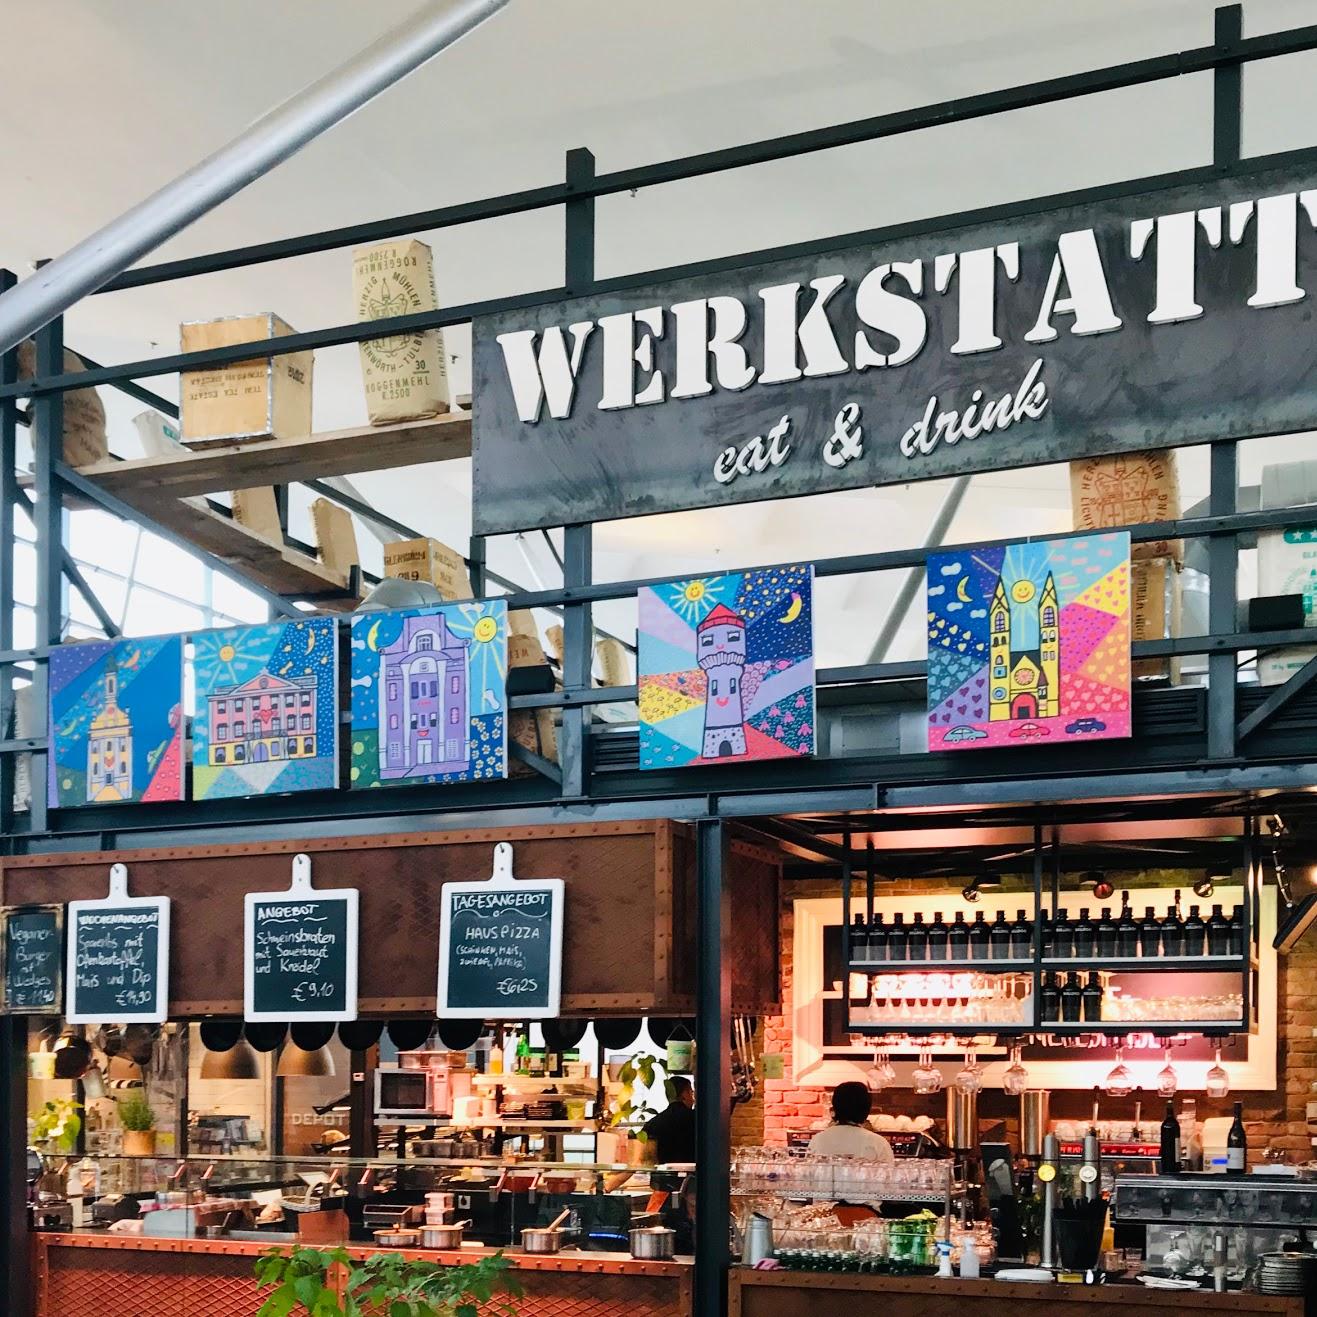 Restaurant "Werkstatt eat & drink" in Wiener Neustadt